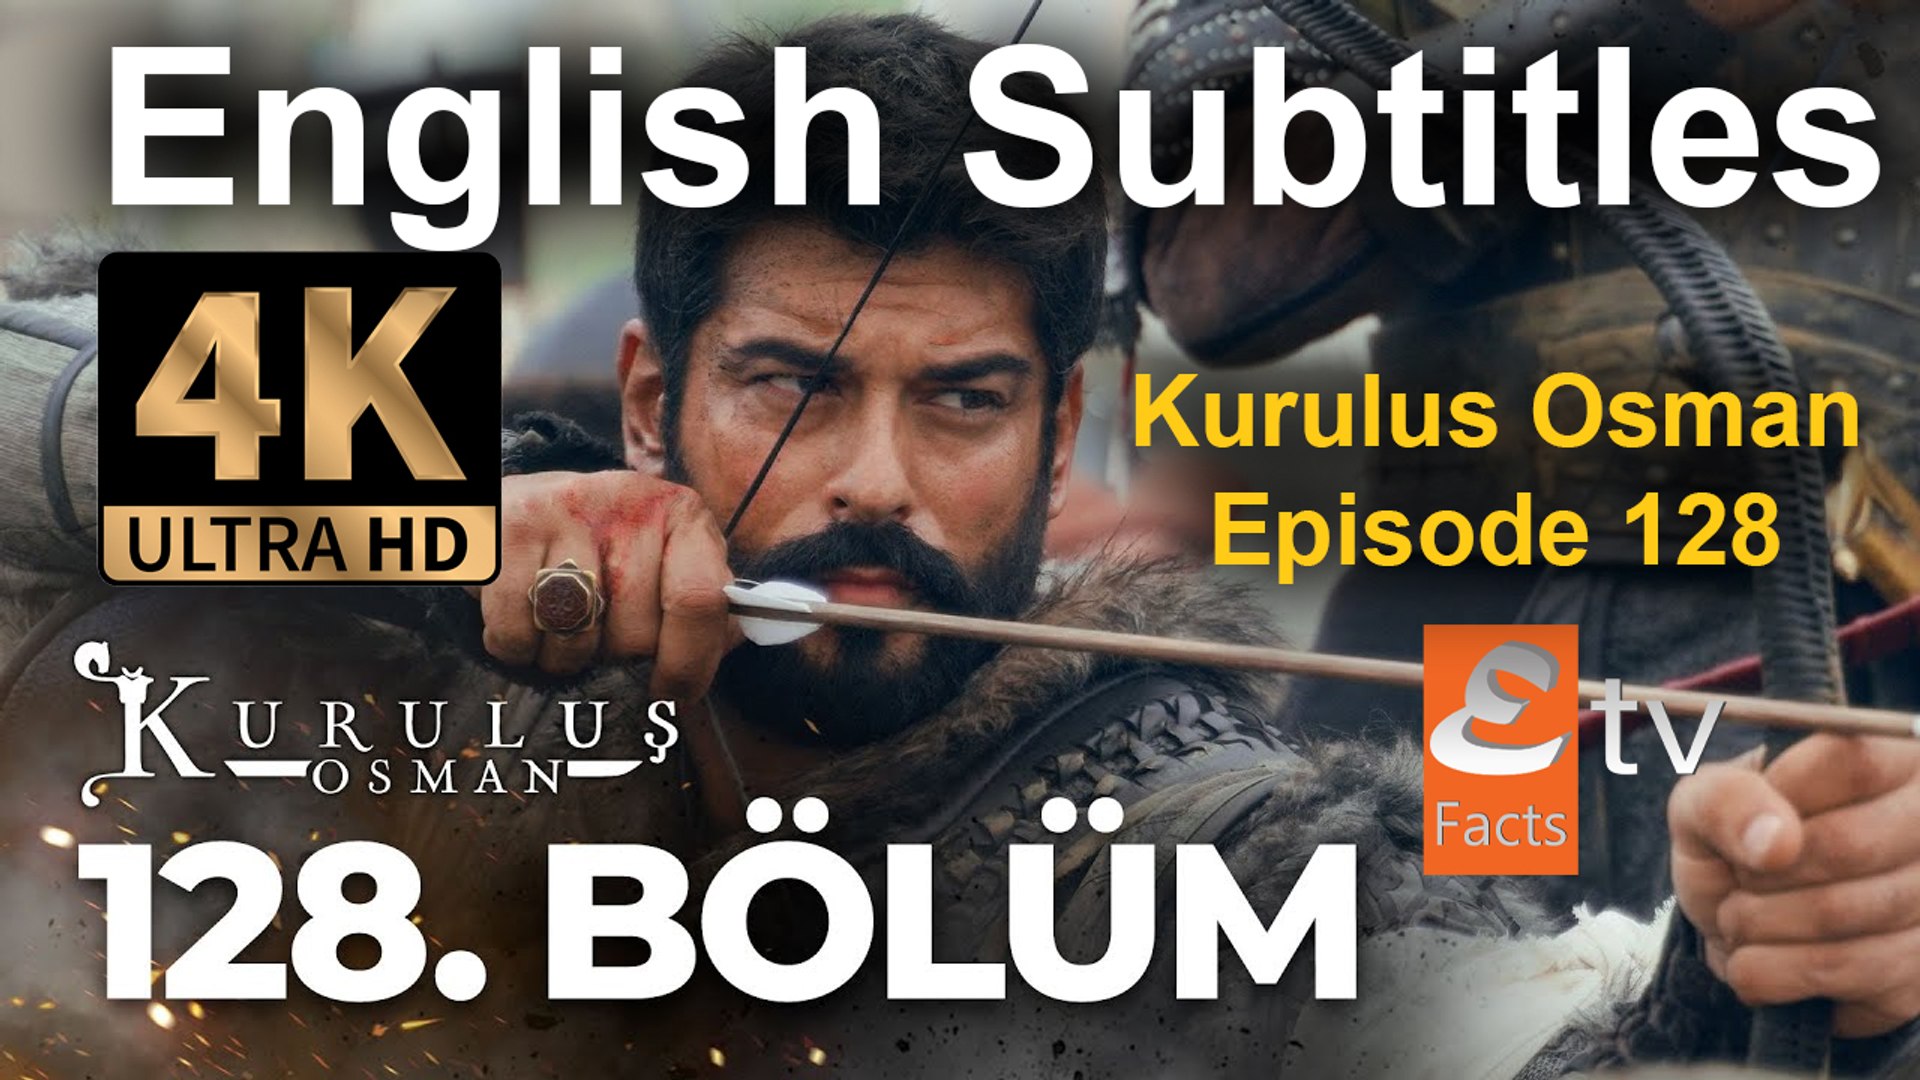 Kurulus Osman Episode 128 English Subtitles ULTRA HD | Kuruluş Osman 128 |  Etv Facts | super hit Turkish series | Kuruluş Osman 128. Bölüm - video  Dailymotion